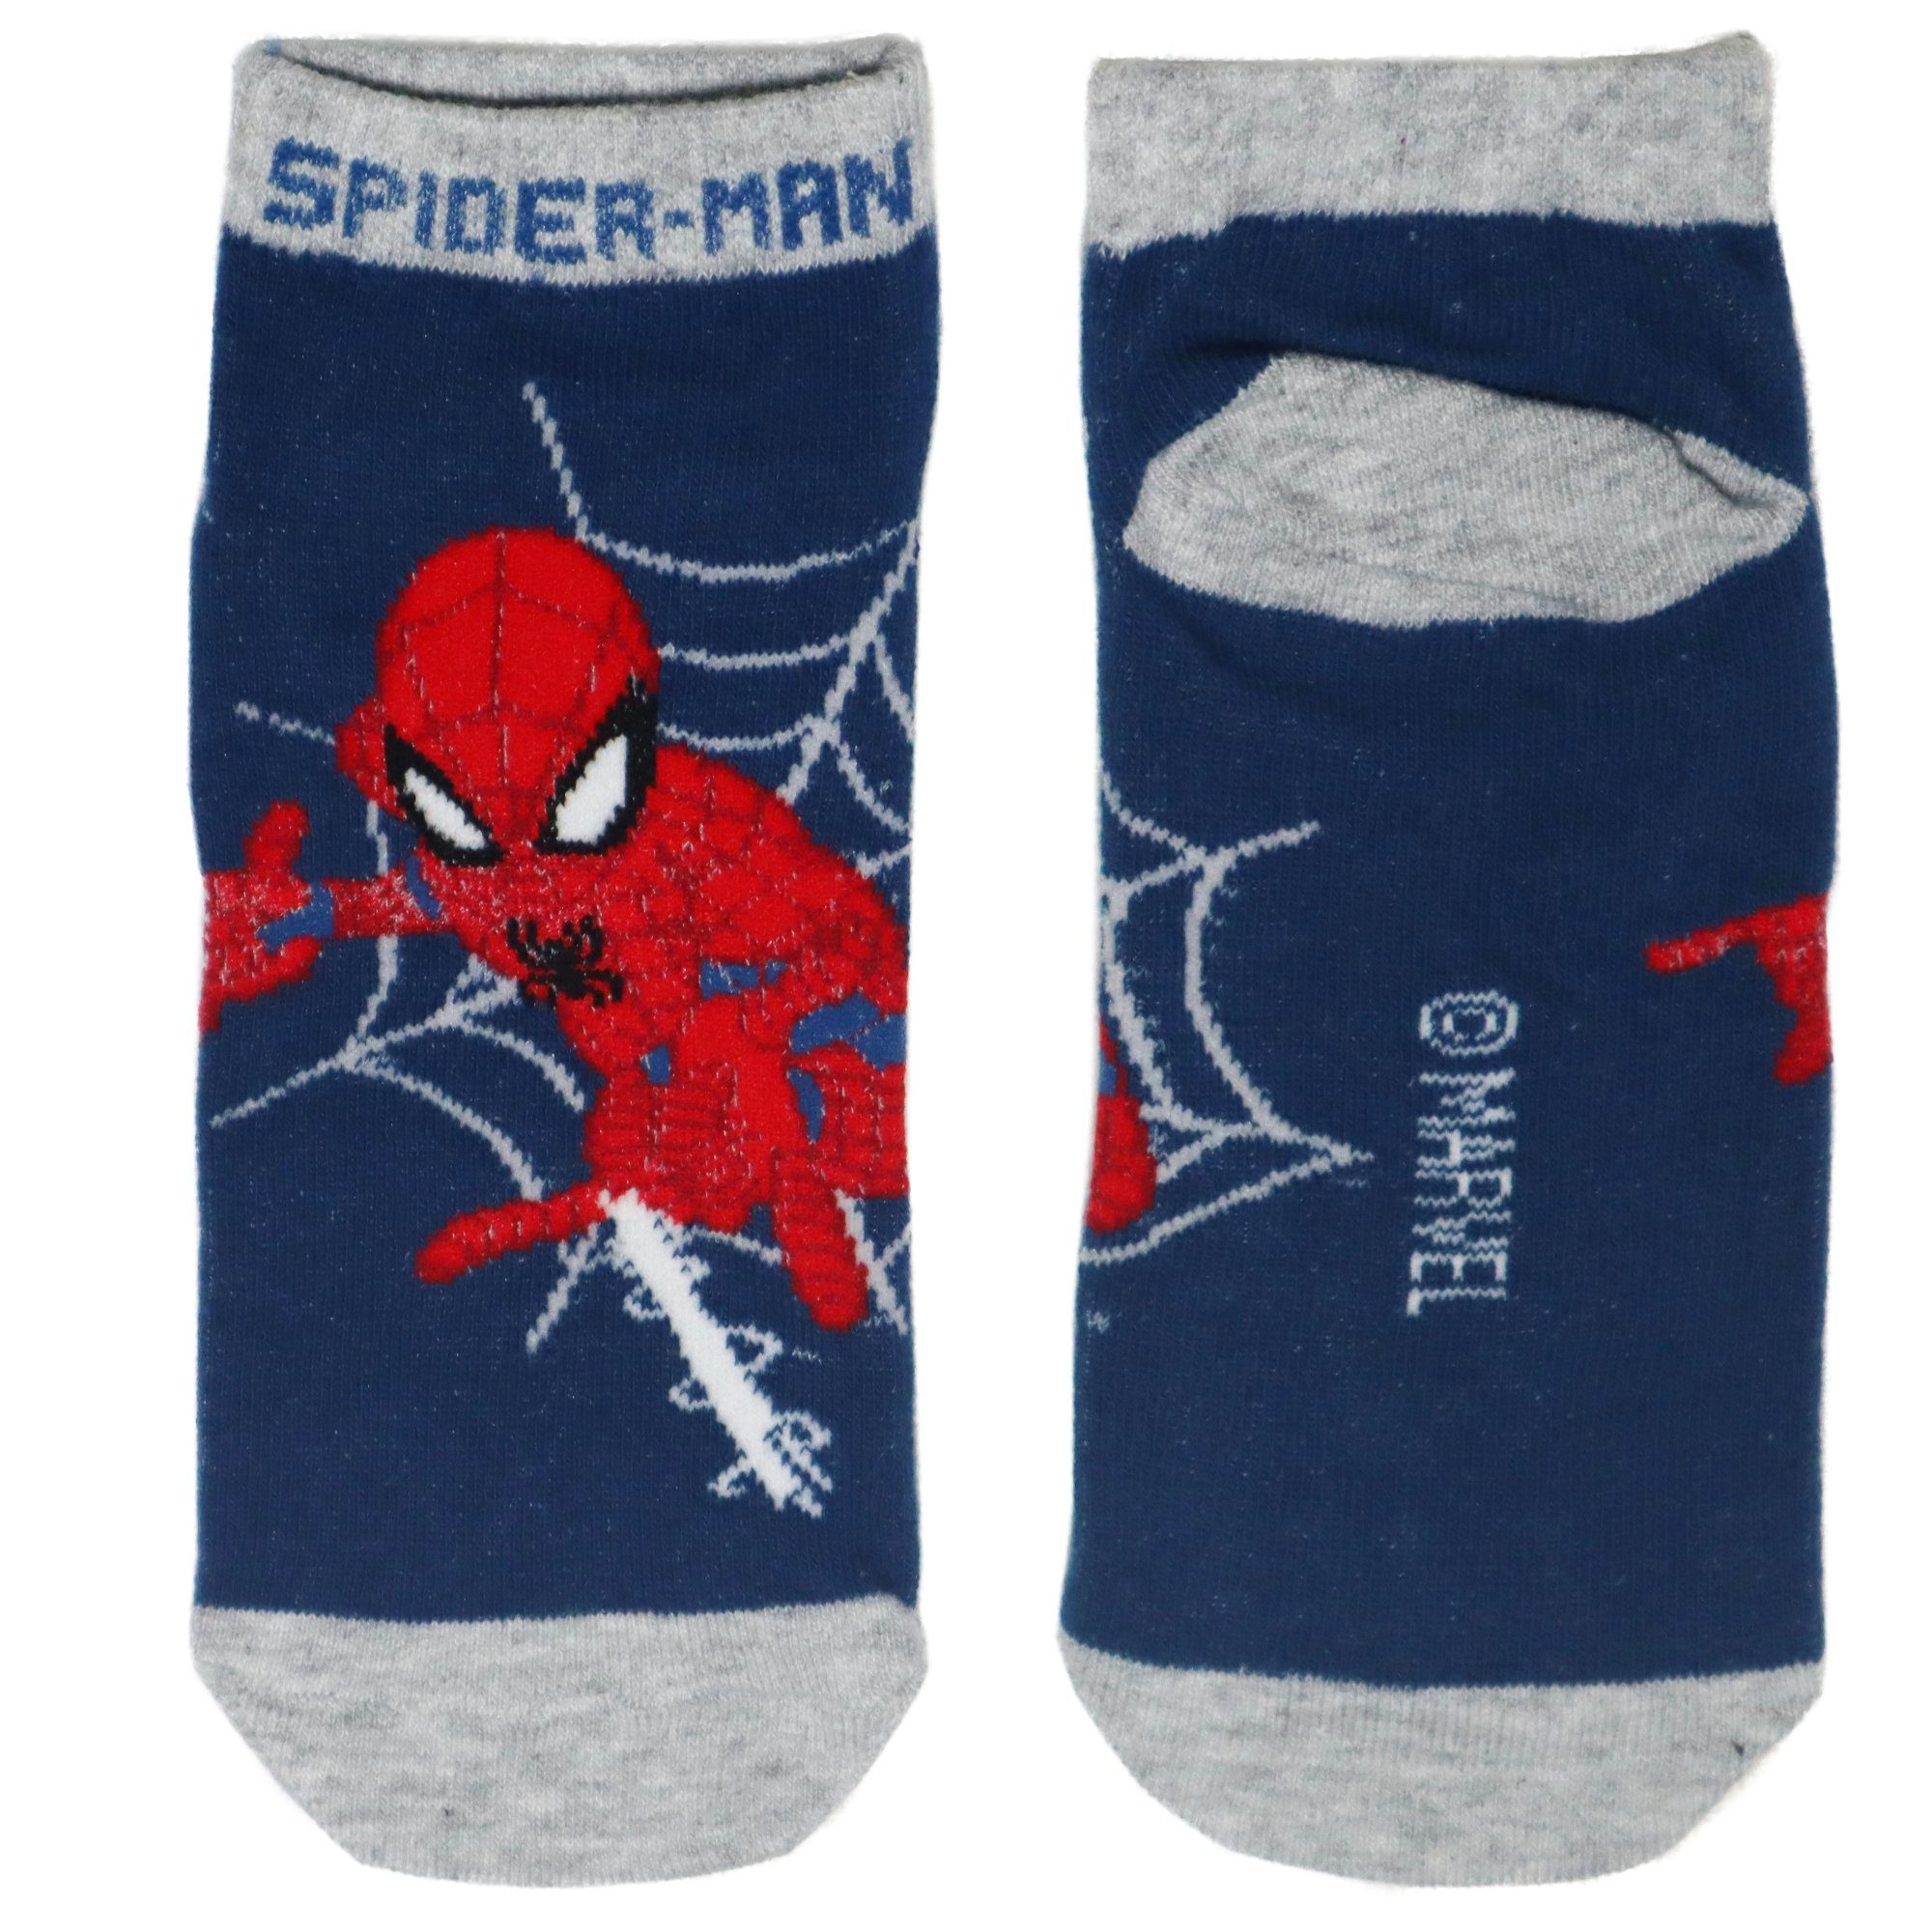 Gr. 23 Kinder Kurzsocken Socken Spiderman kurze bis 2er Pack Marvel MARVEL 34